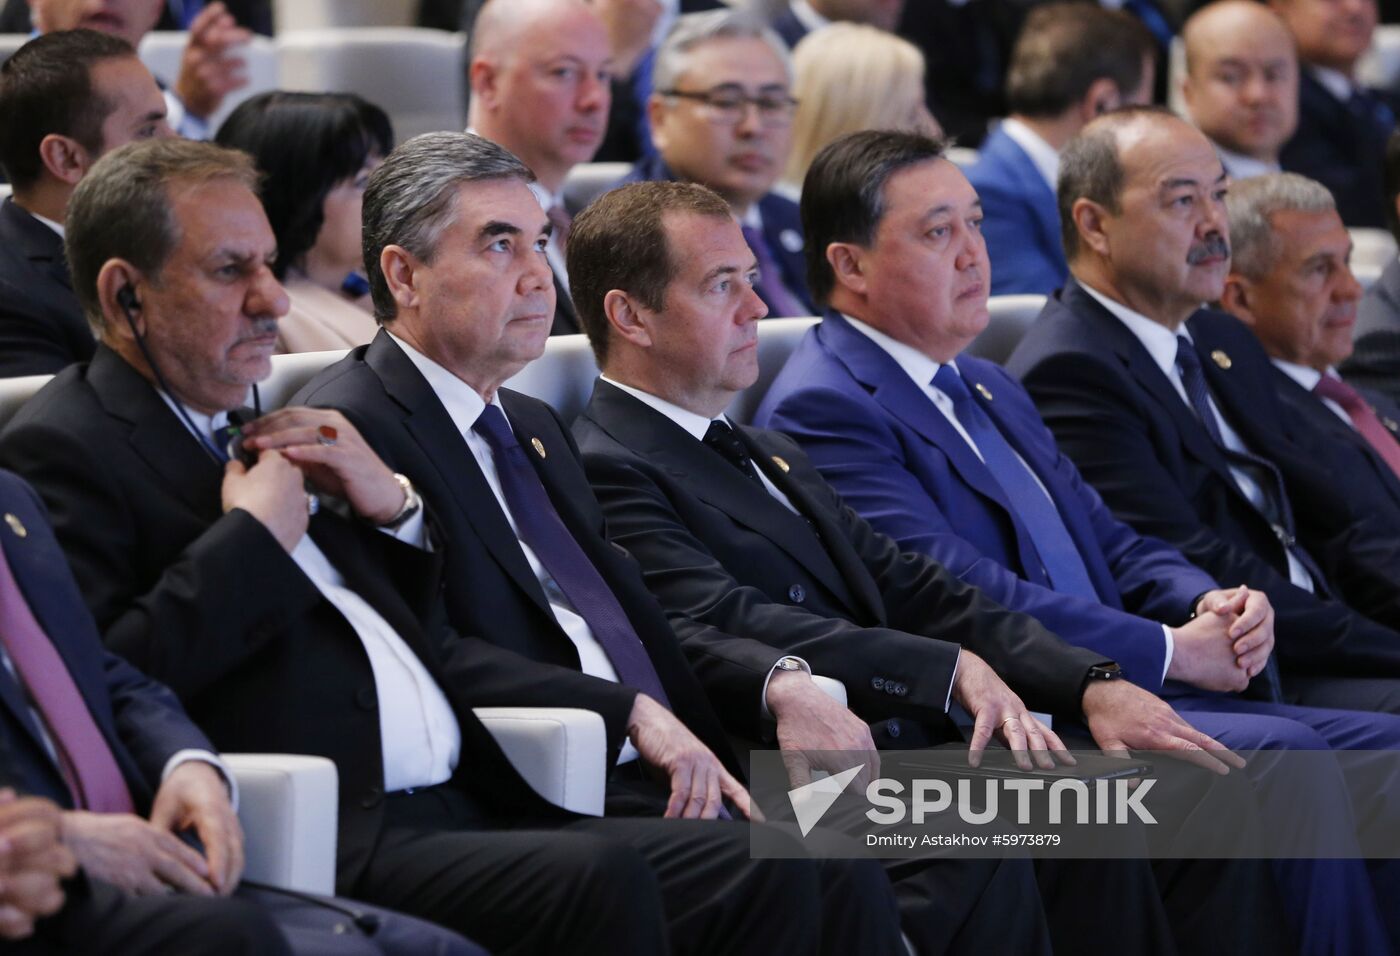 Turkmenistan Caspian Economic Forum